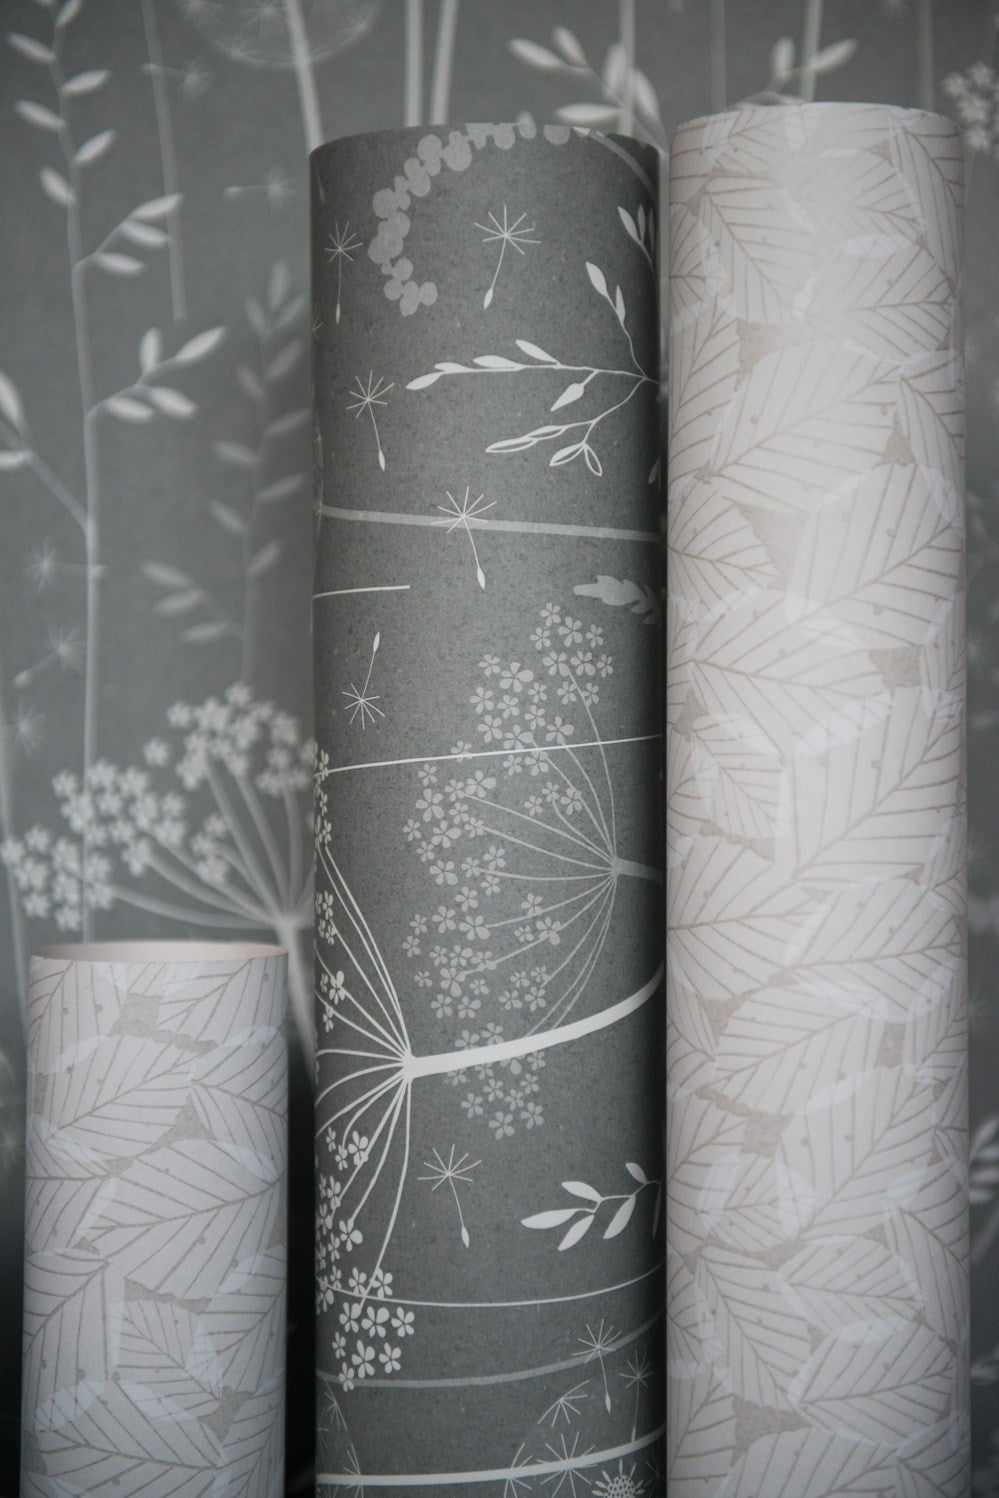 Paper Meadow Wallpaper in Charcoal